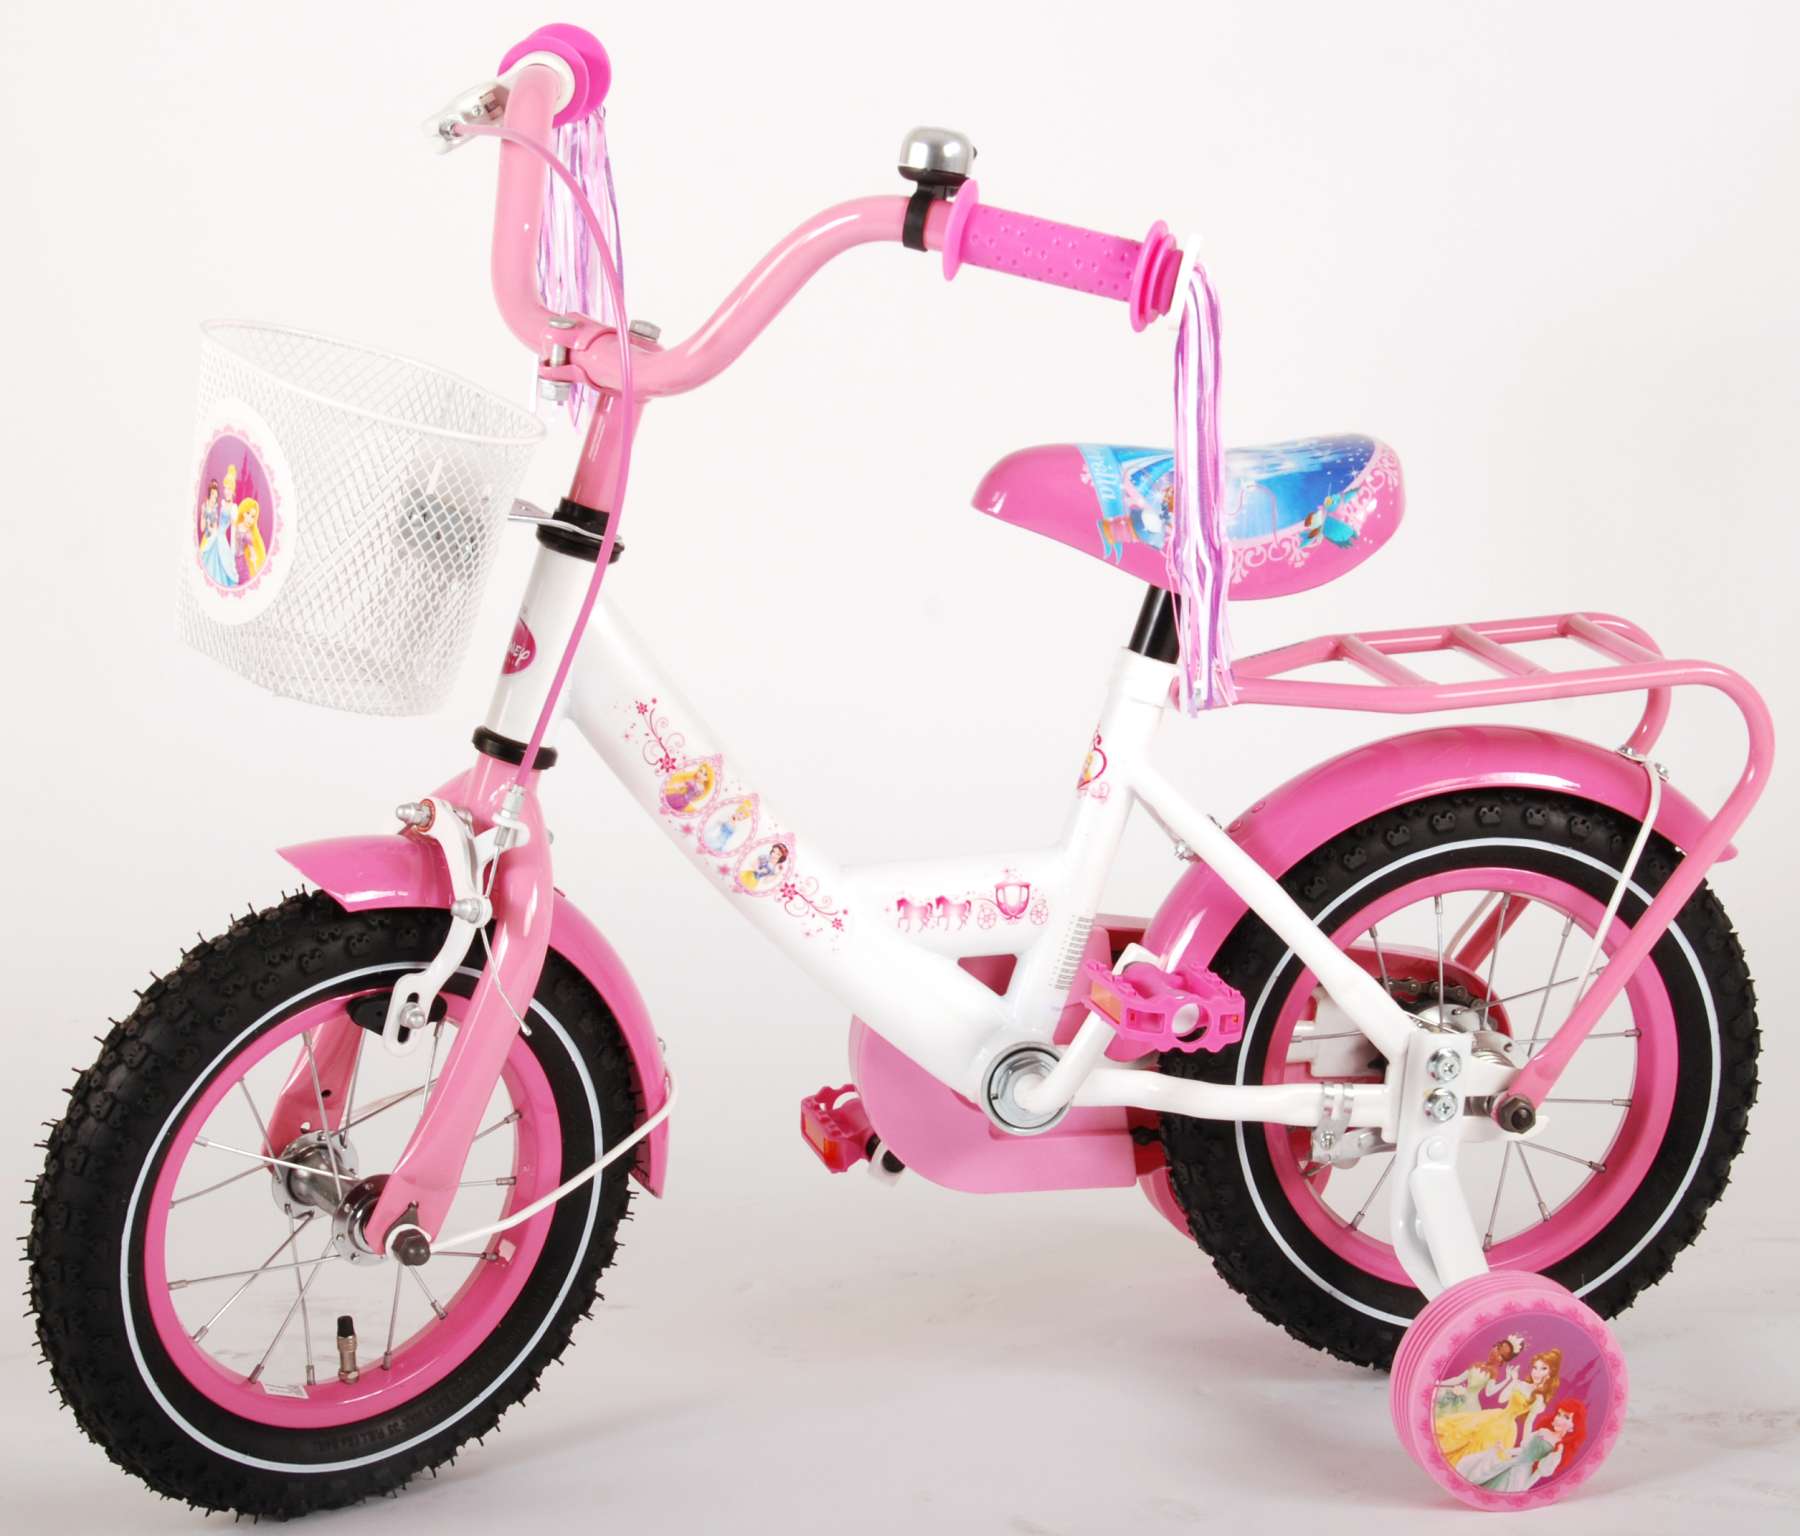 disney princess bike 10 inch